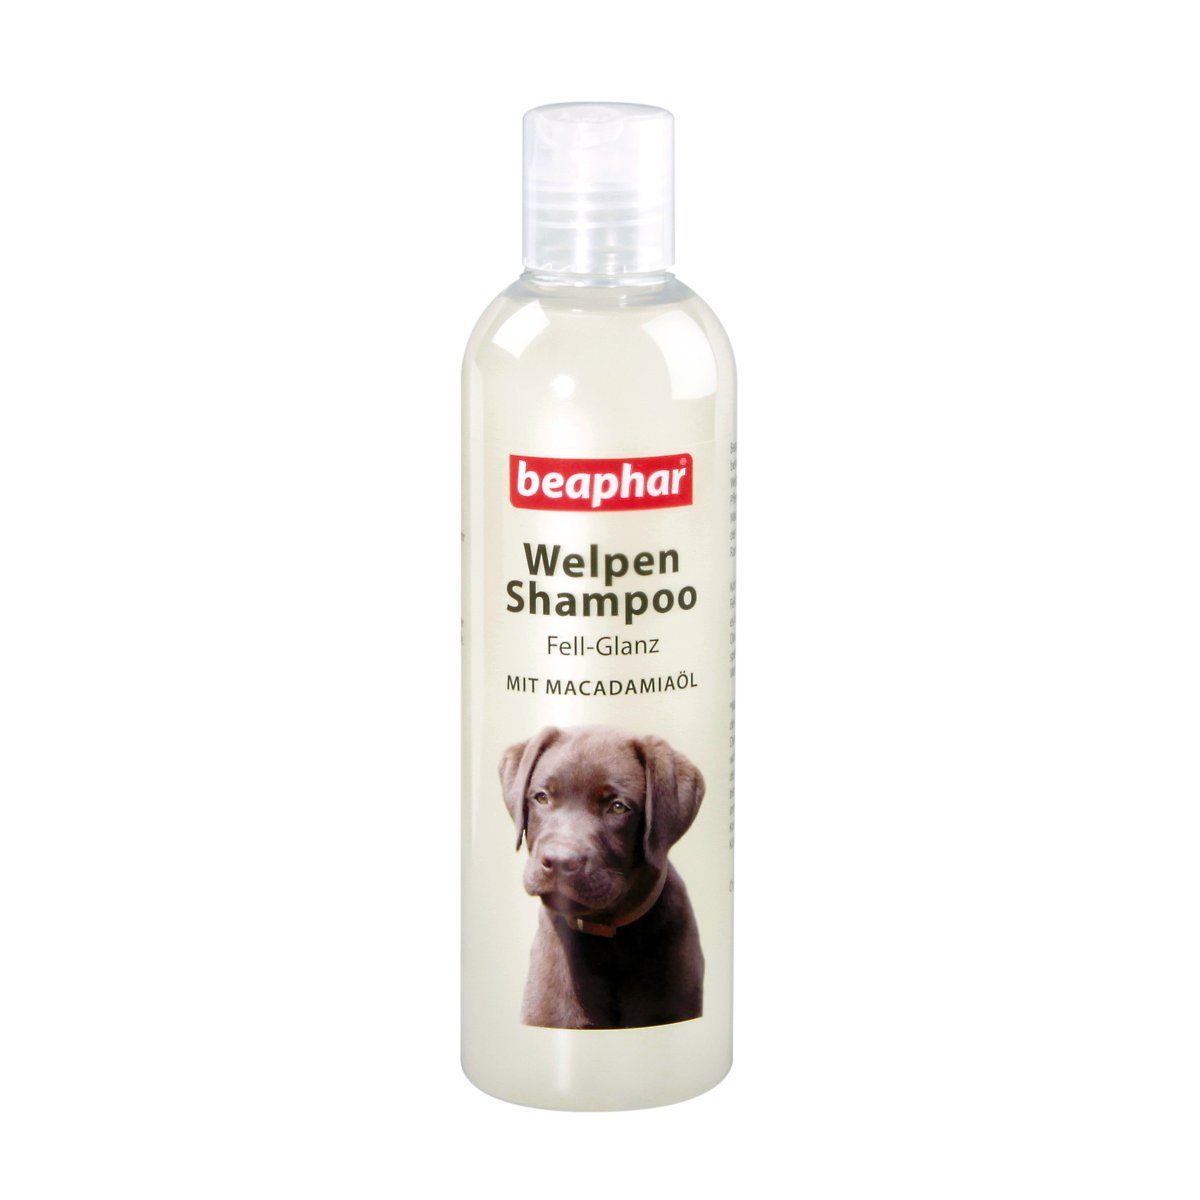 beaphar Tiershampoo Welpen Shampoo Fell-Glanz - 250 ml